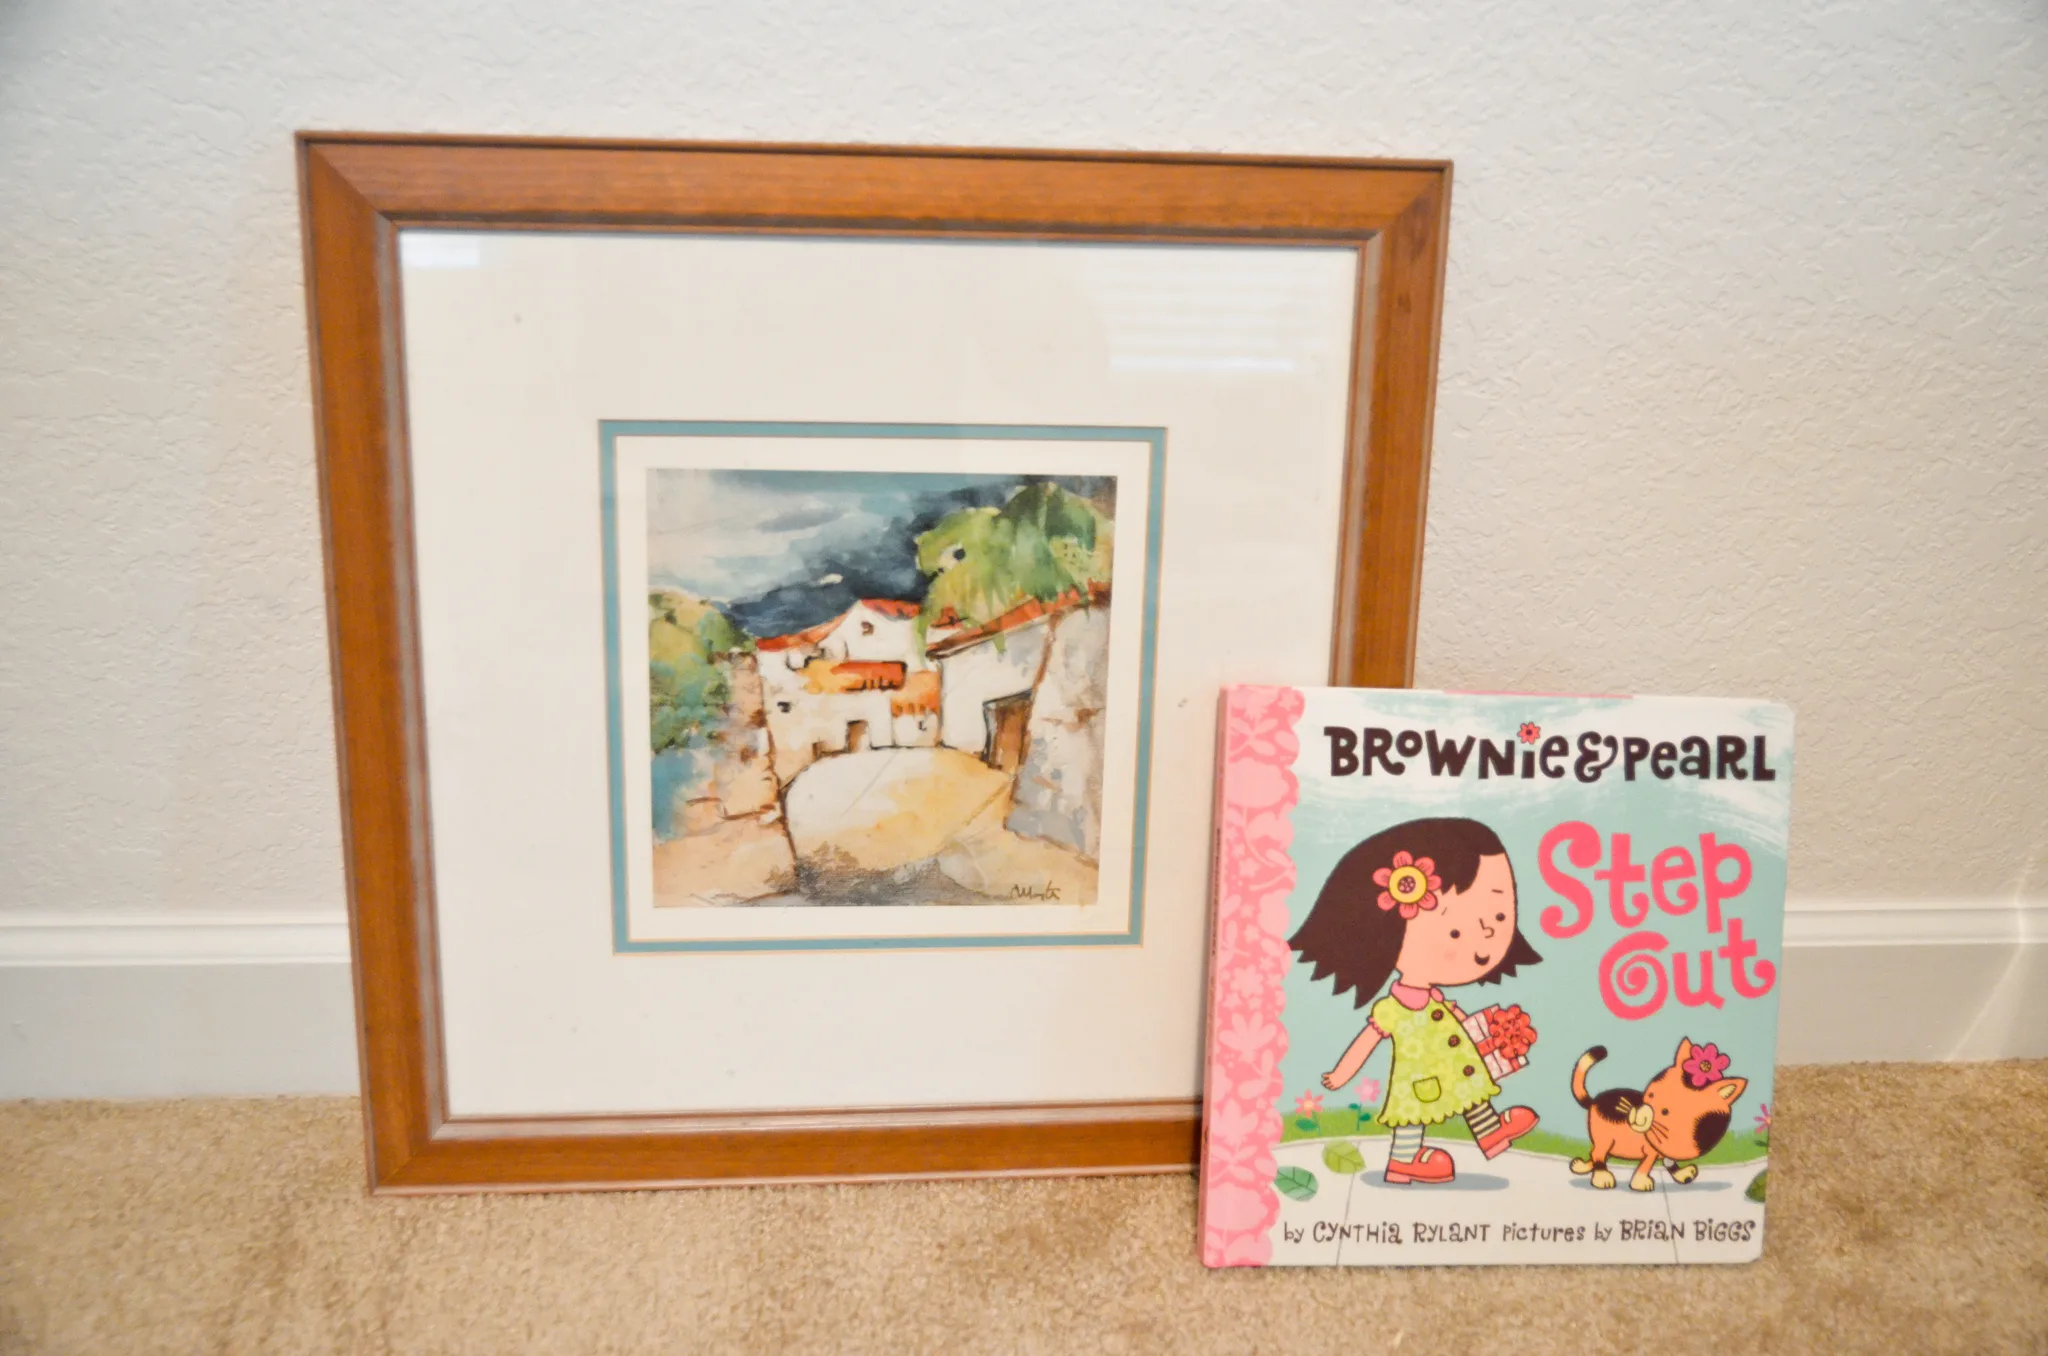 Thrift Store Frame and Children's Book for Nursery Art